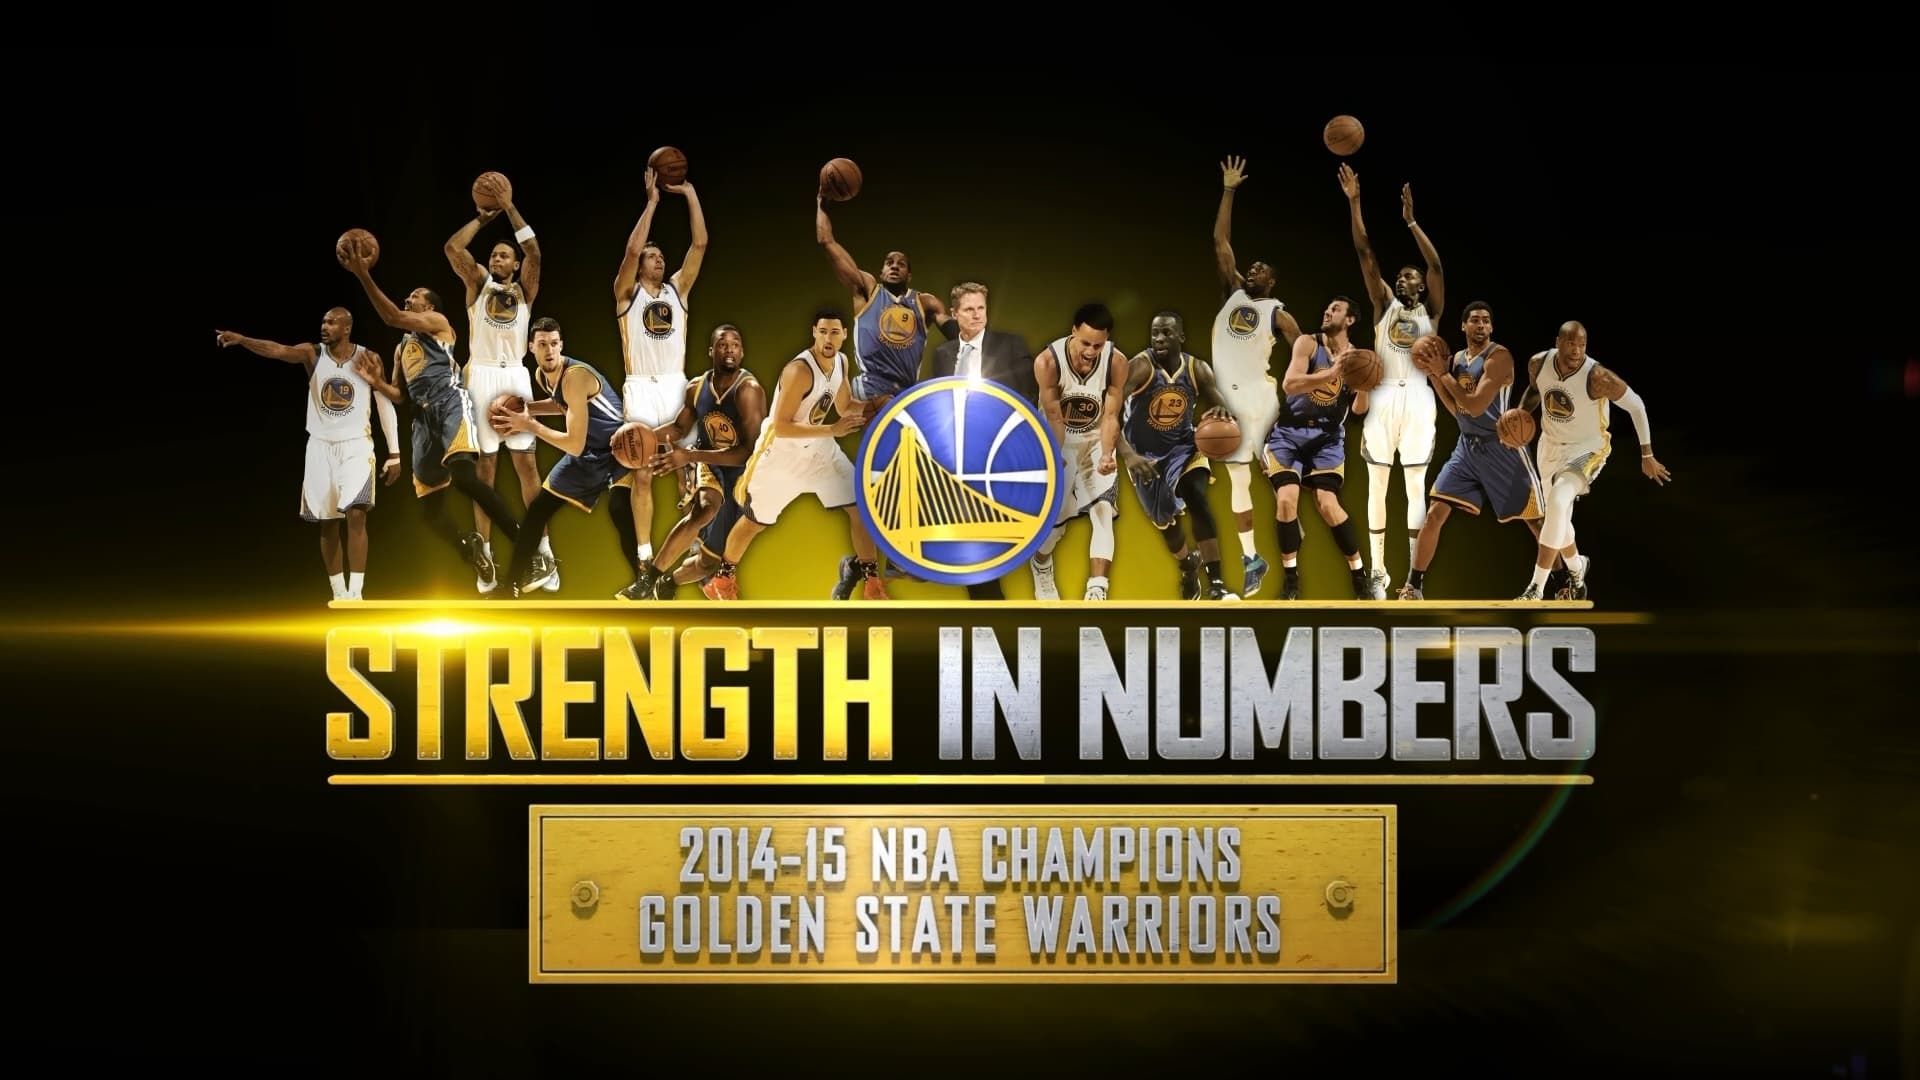 2014-2015 NBA Champions - Golden State Warriors background